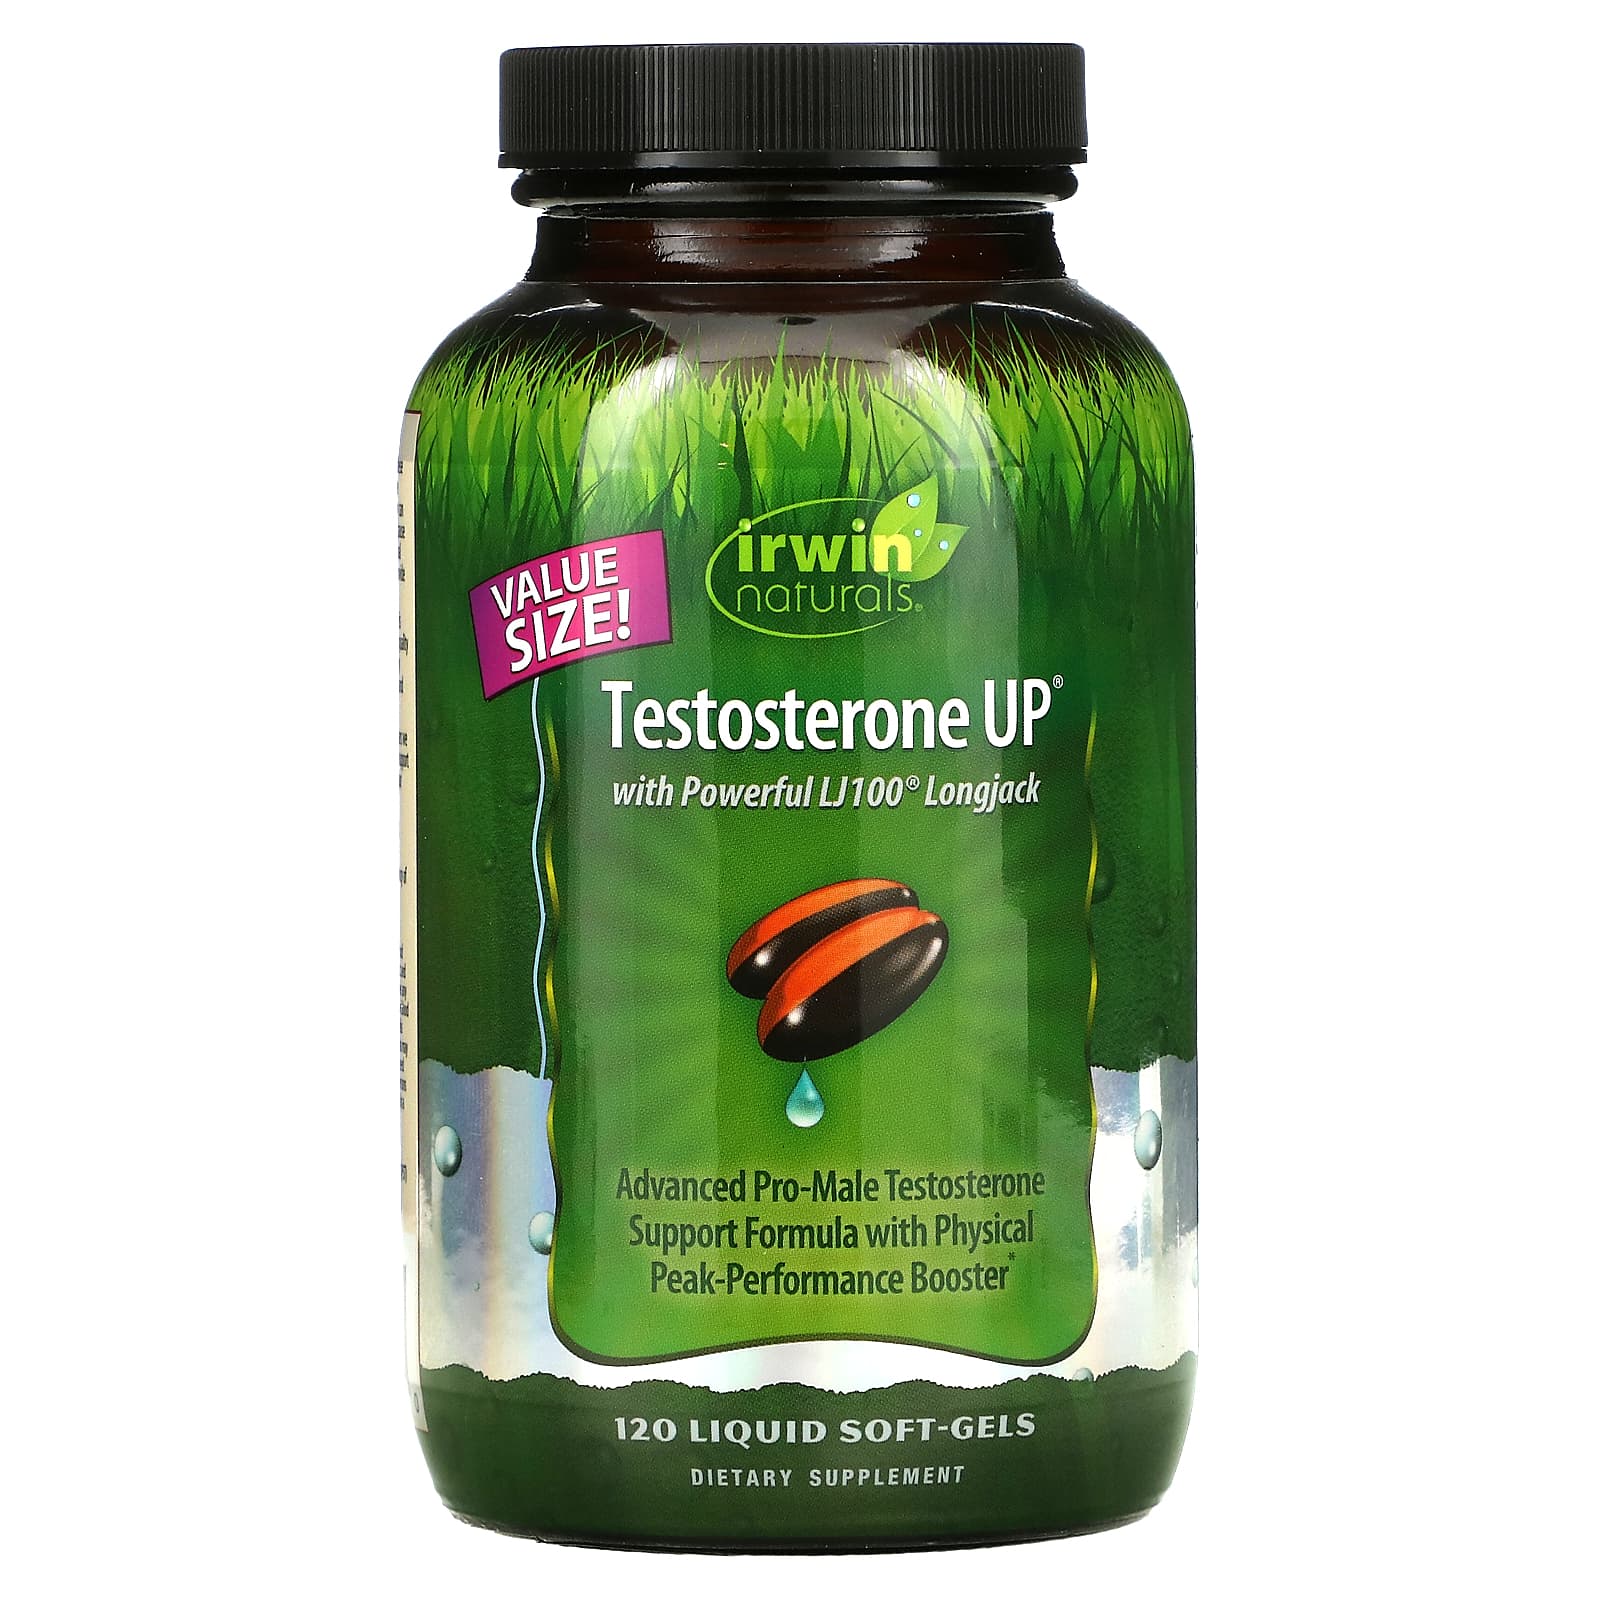 Irwin Naturals Тестостерон UP 120 софтгелей irwin naturals testosterone up тестостерон 120 капсул с жидкостью